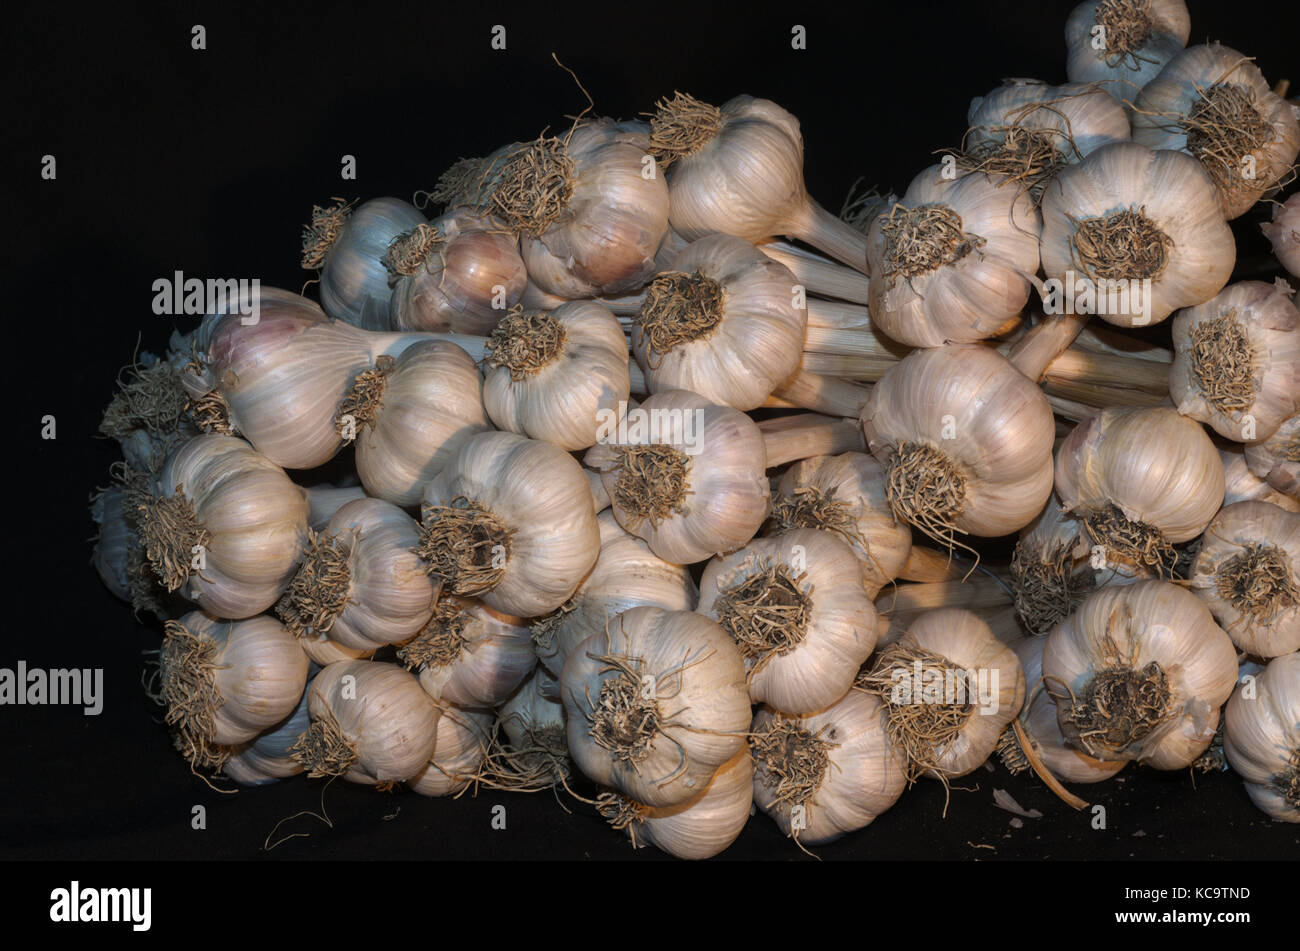 Garlic Bunch on Black Background Stock Photo